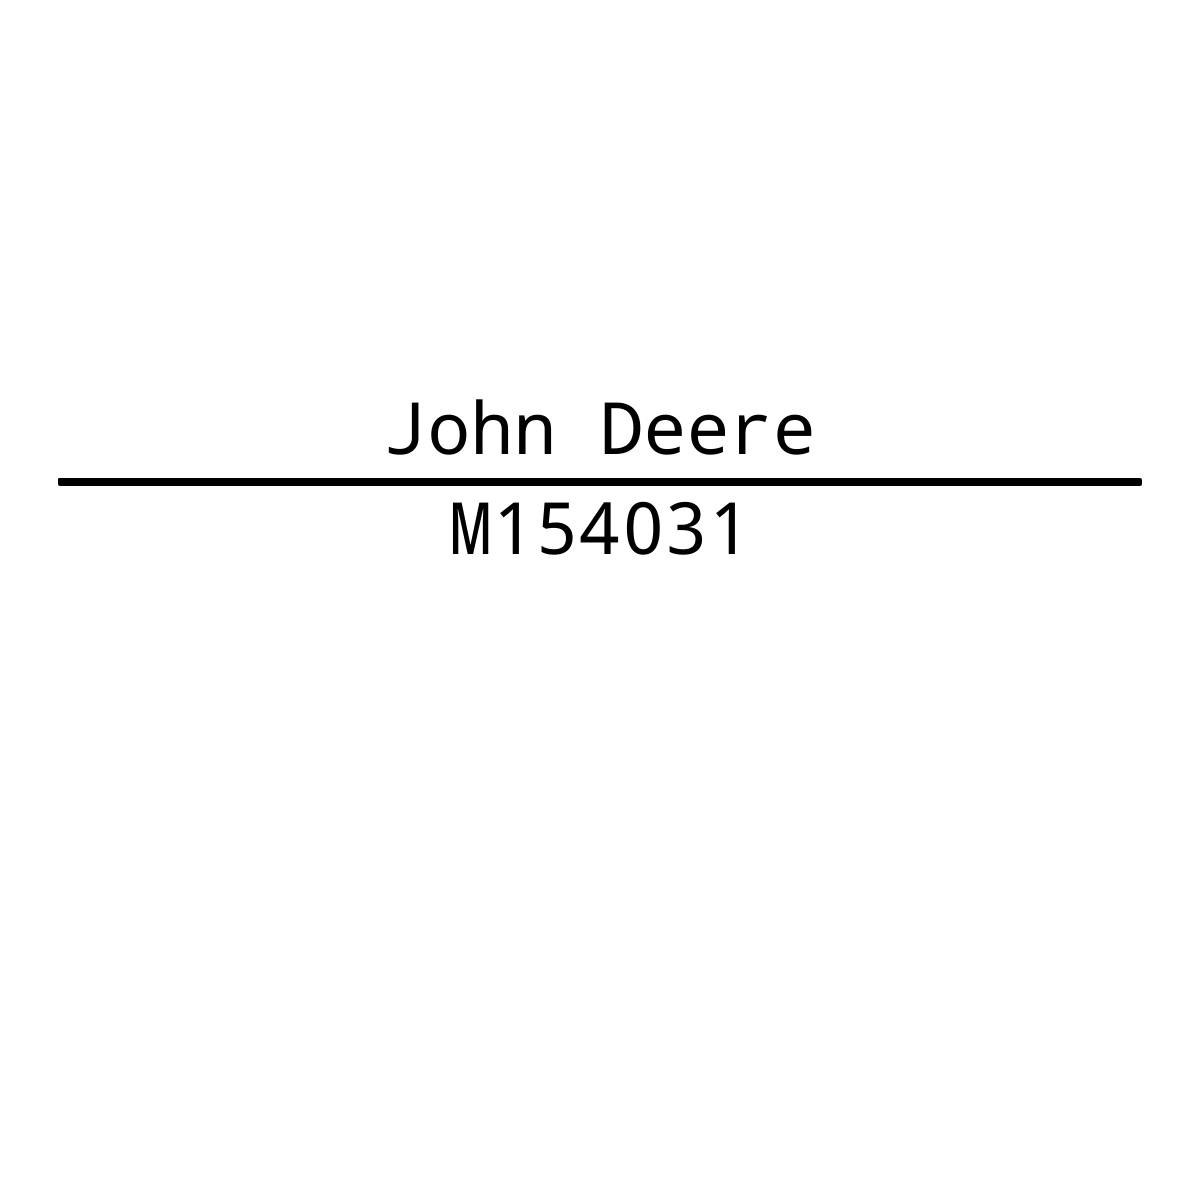 John Deere M154031 Tire